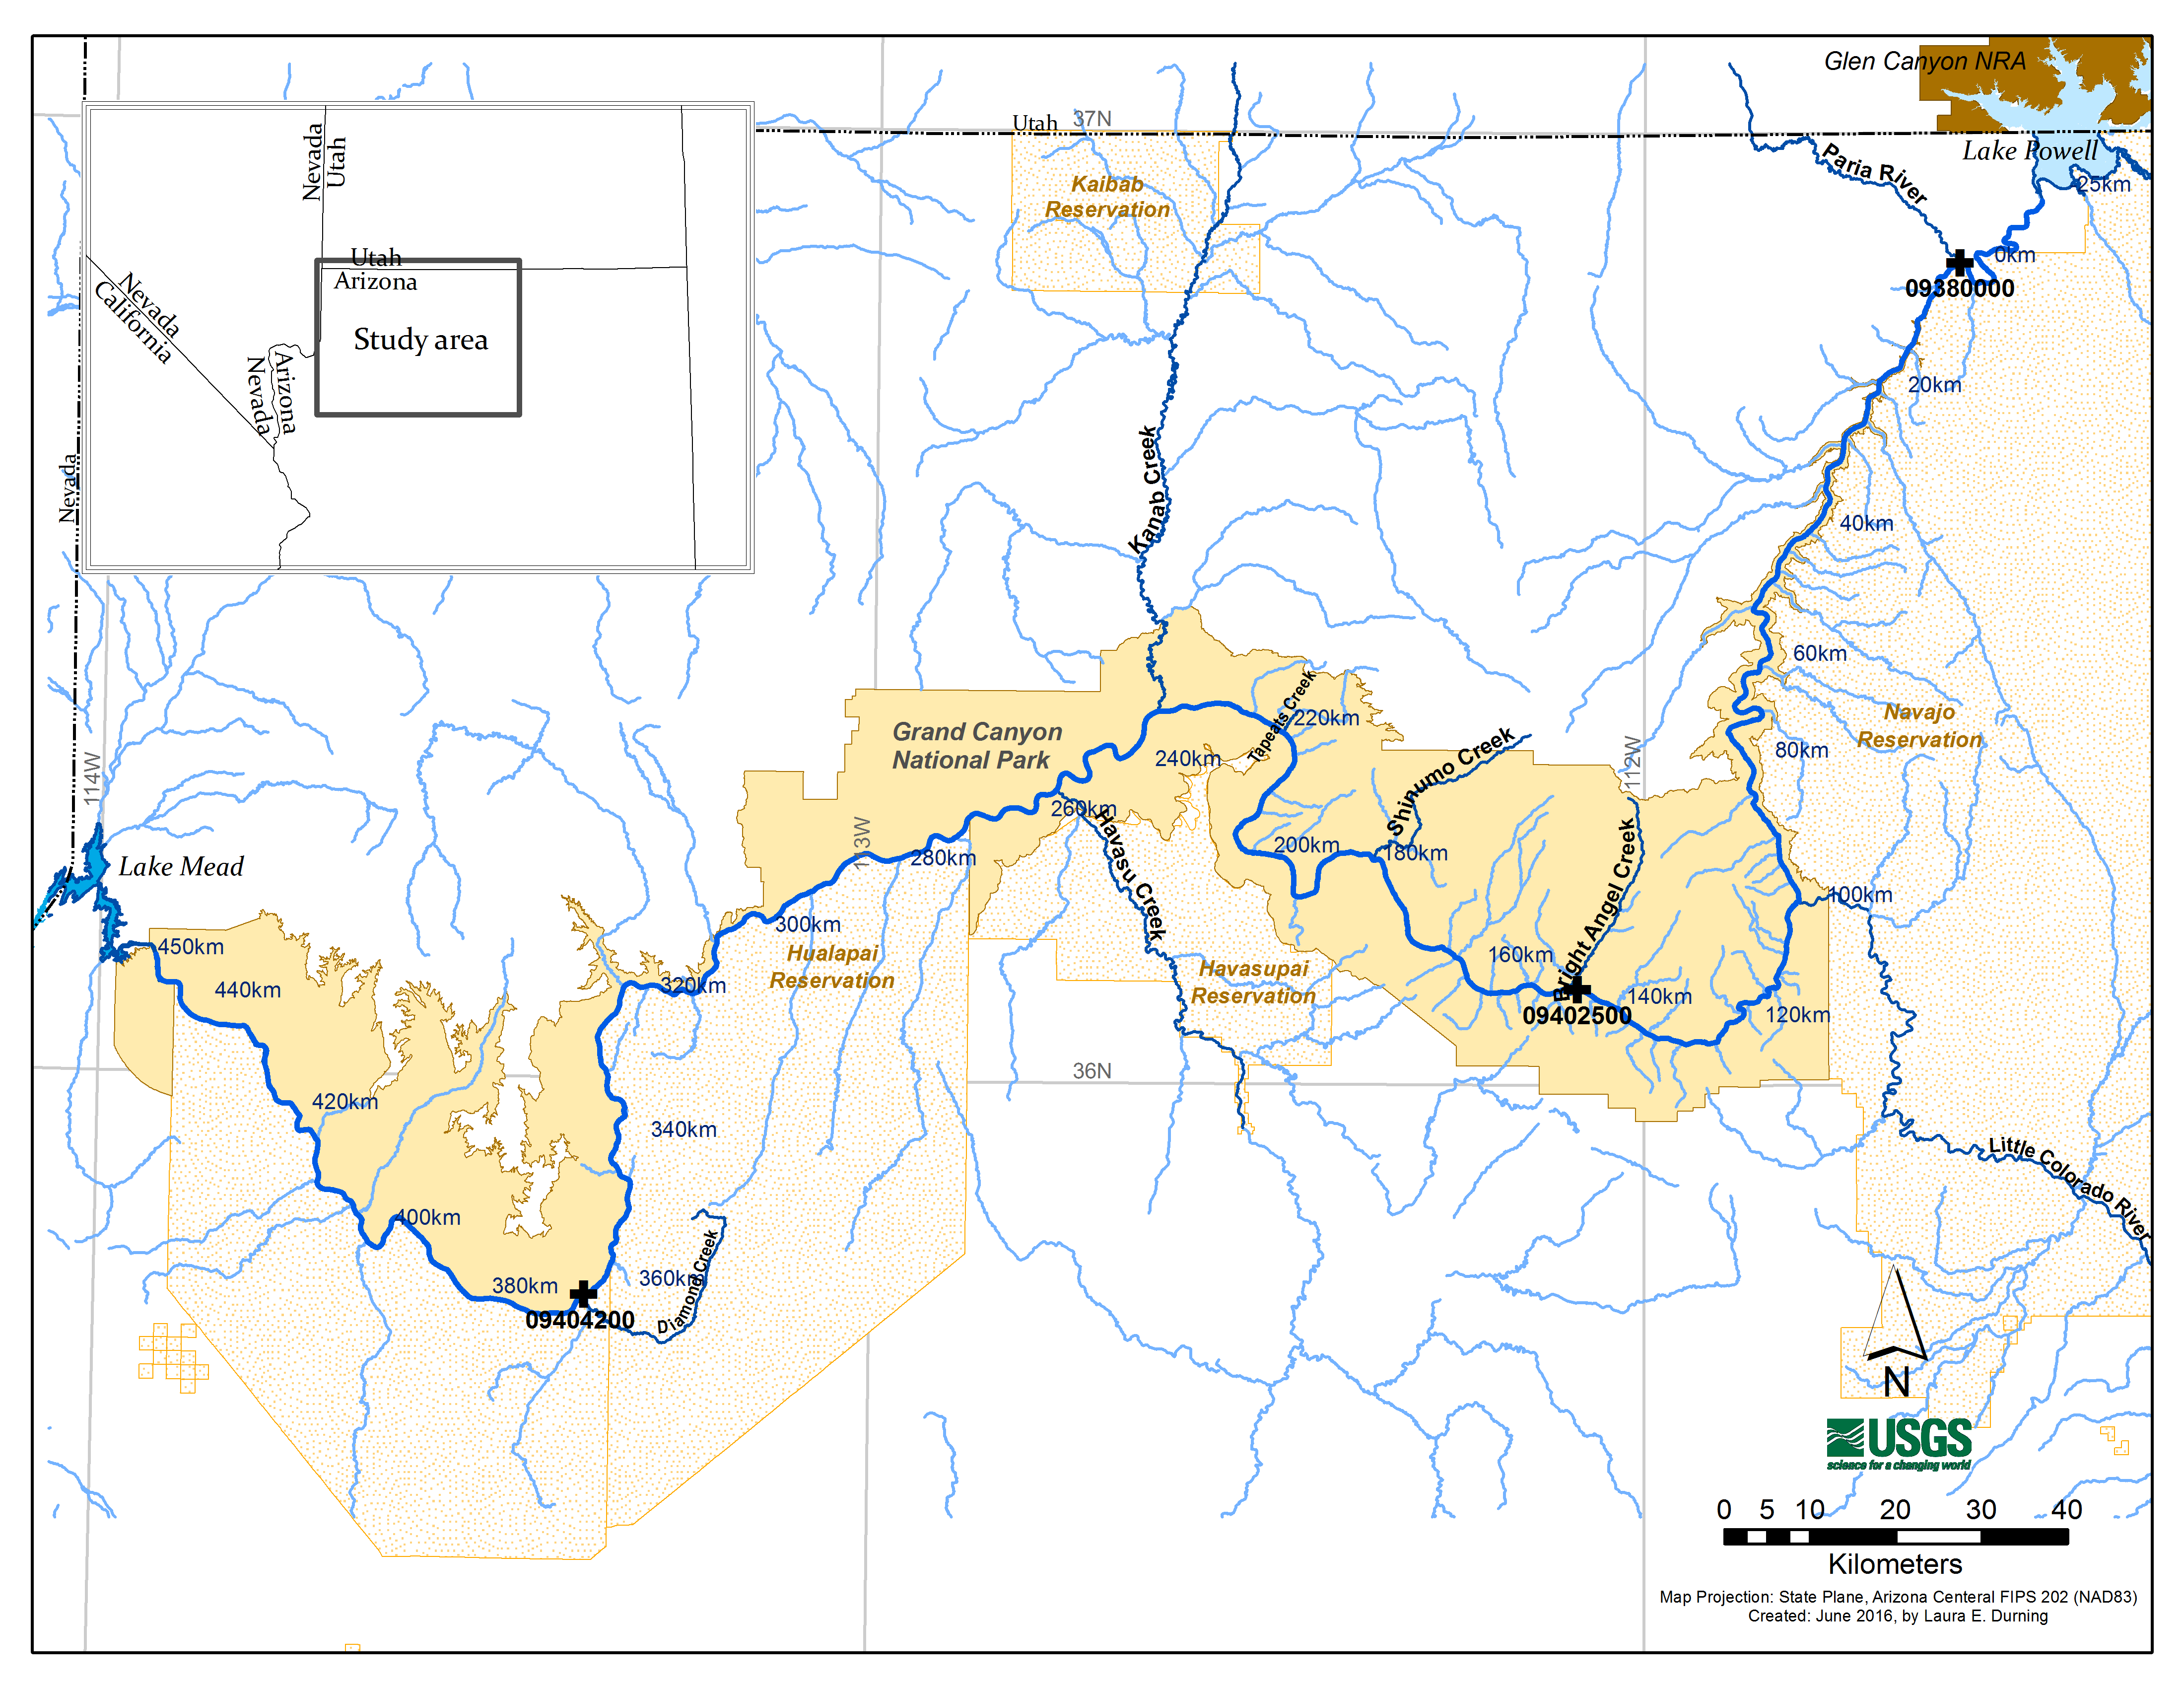 Usgs Data Series 1027 Four Band Image Mosaic Of The Colorado River Corridor Downstream Of Glen